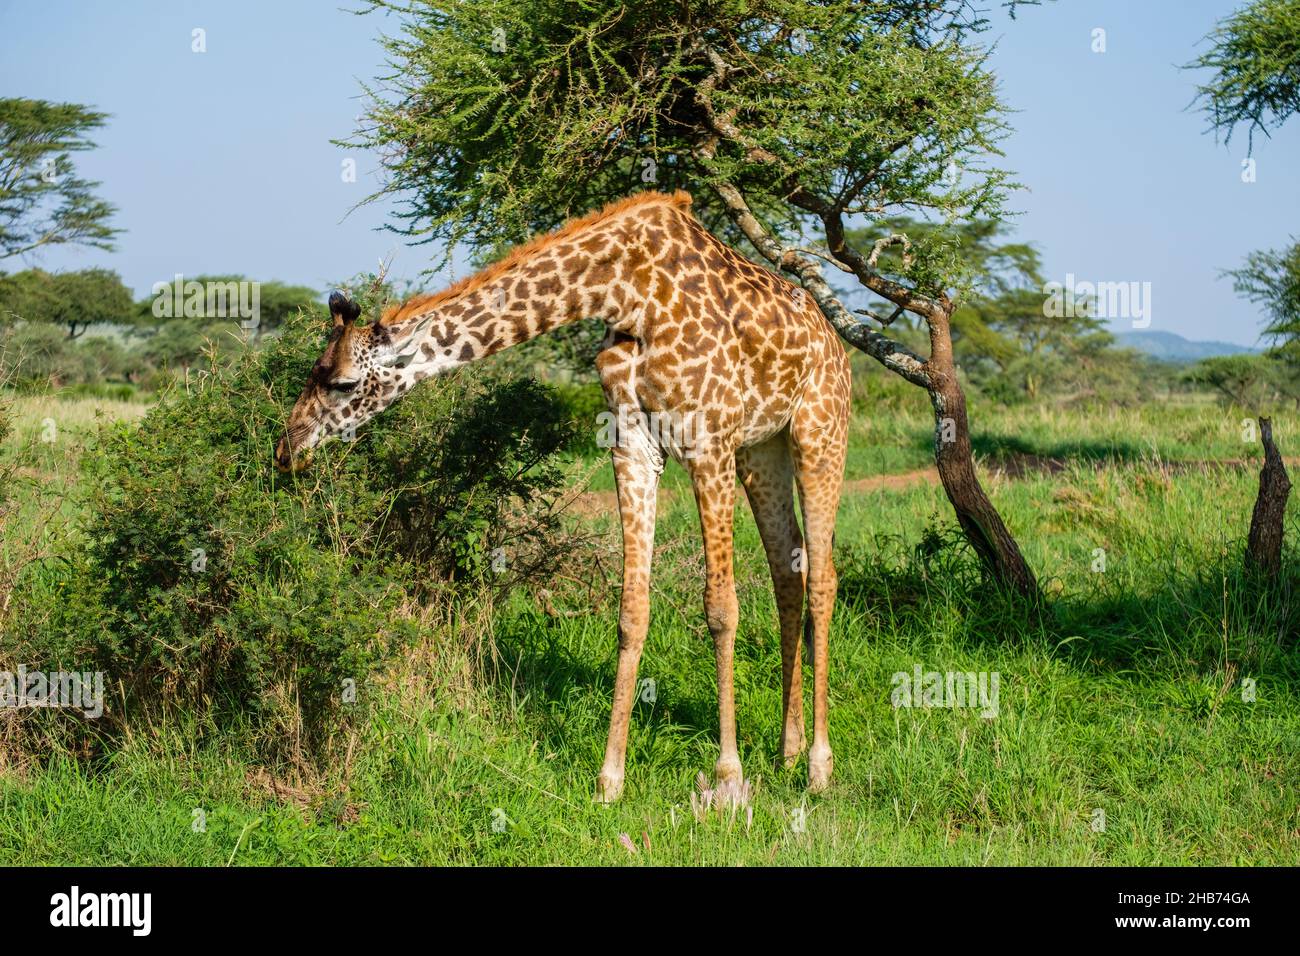 Young giraffe feeding on a shrub in Serengeti National Park, Tanzania Stock Photo